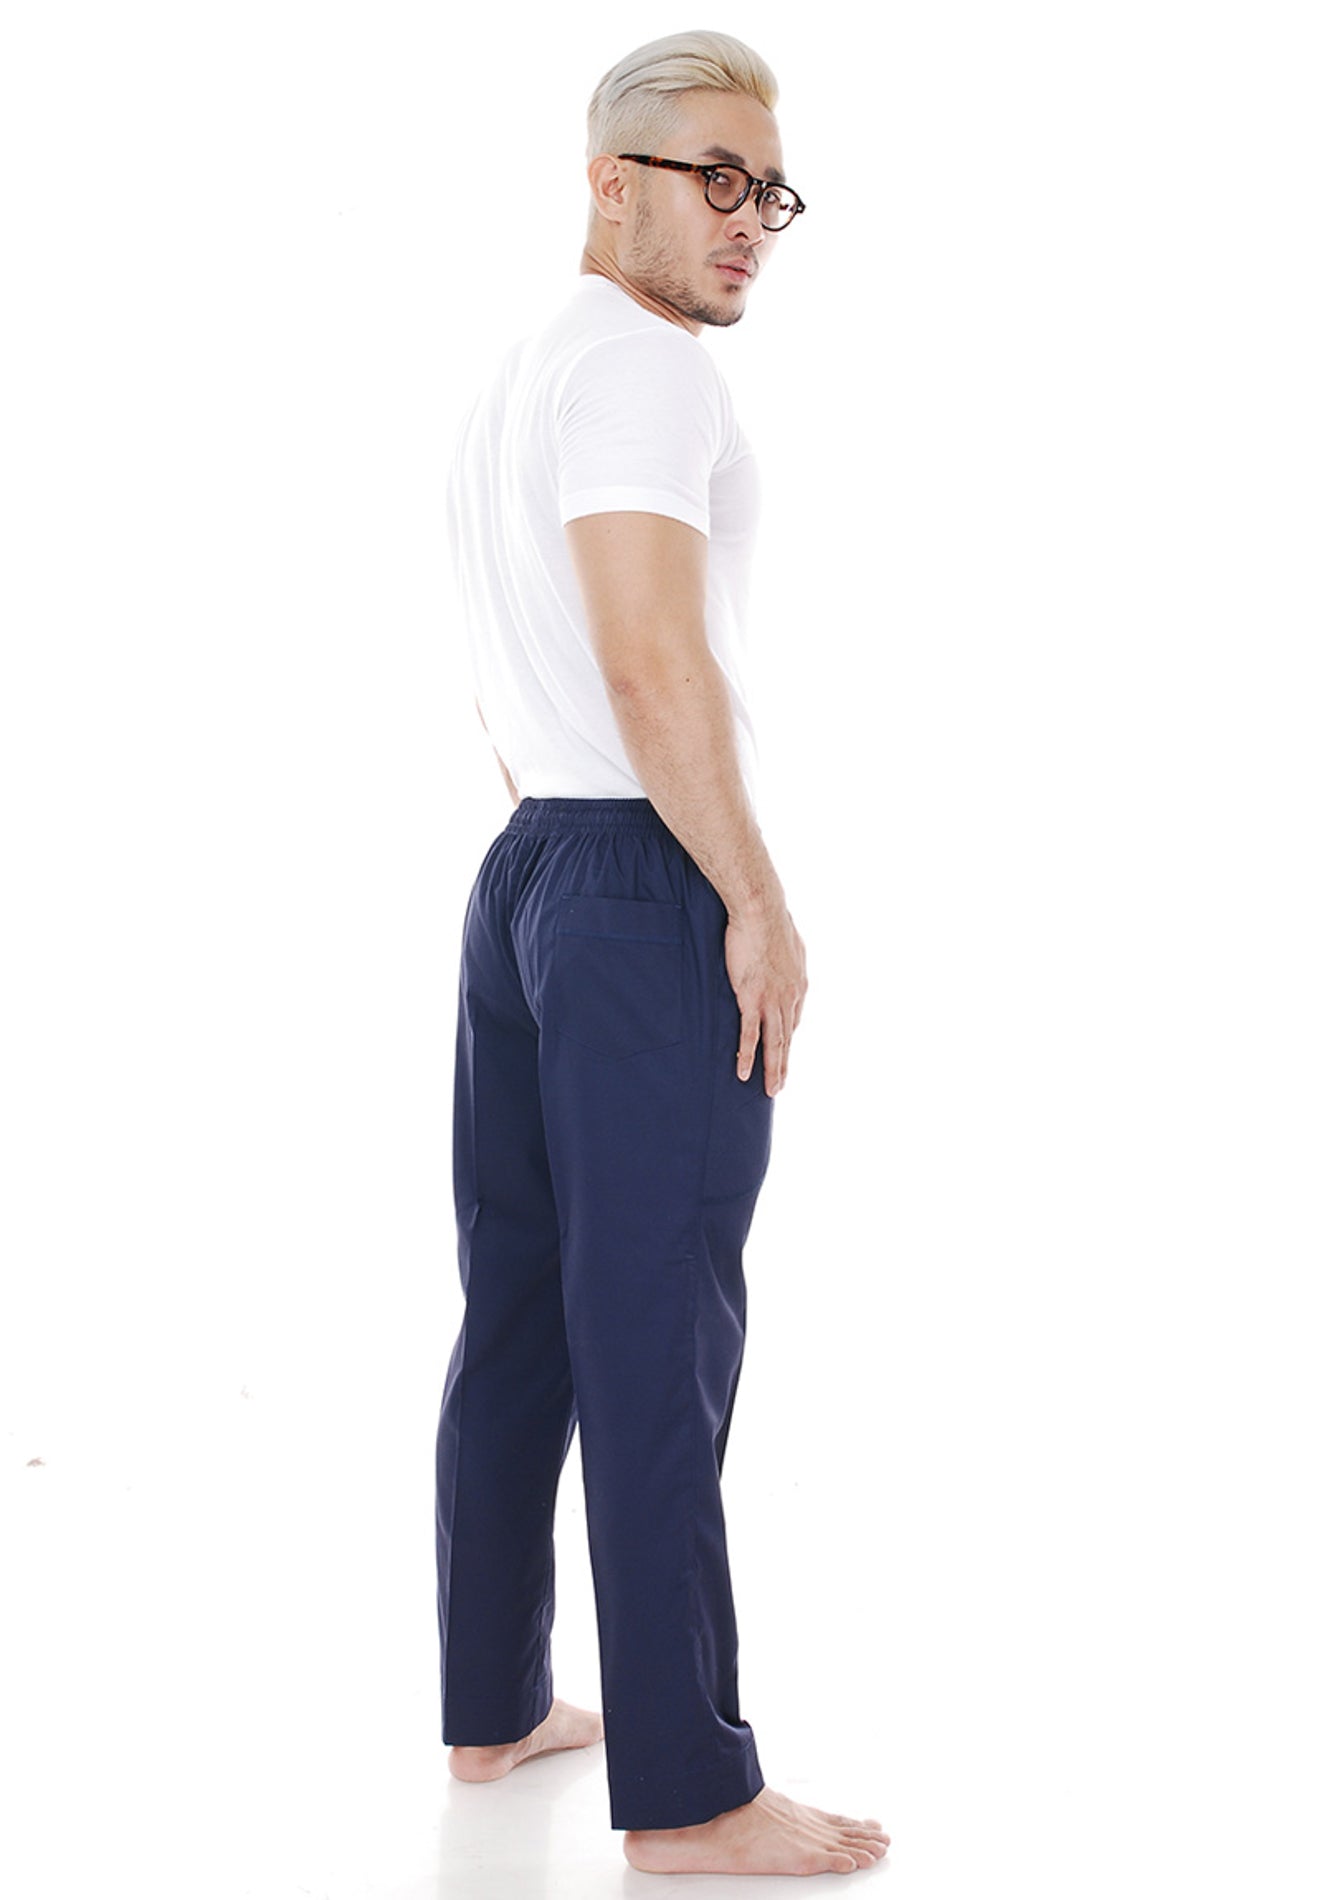 Basic Pant Navy Blue